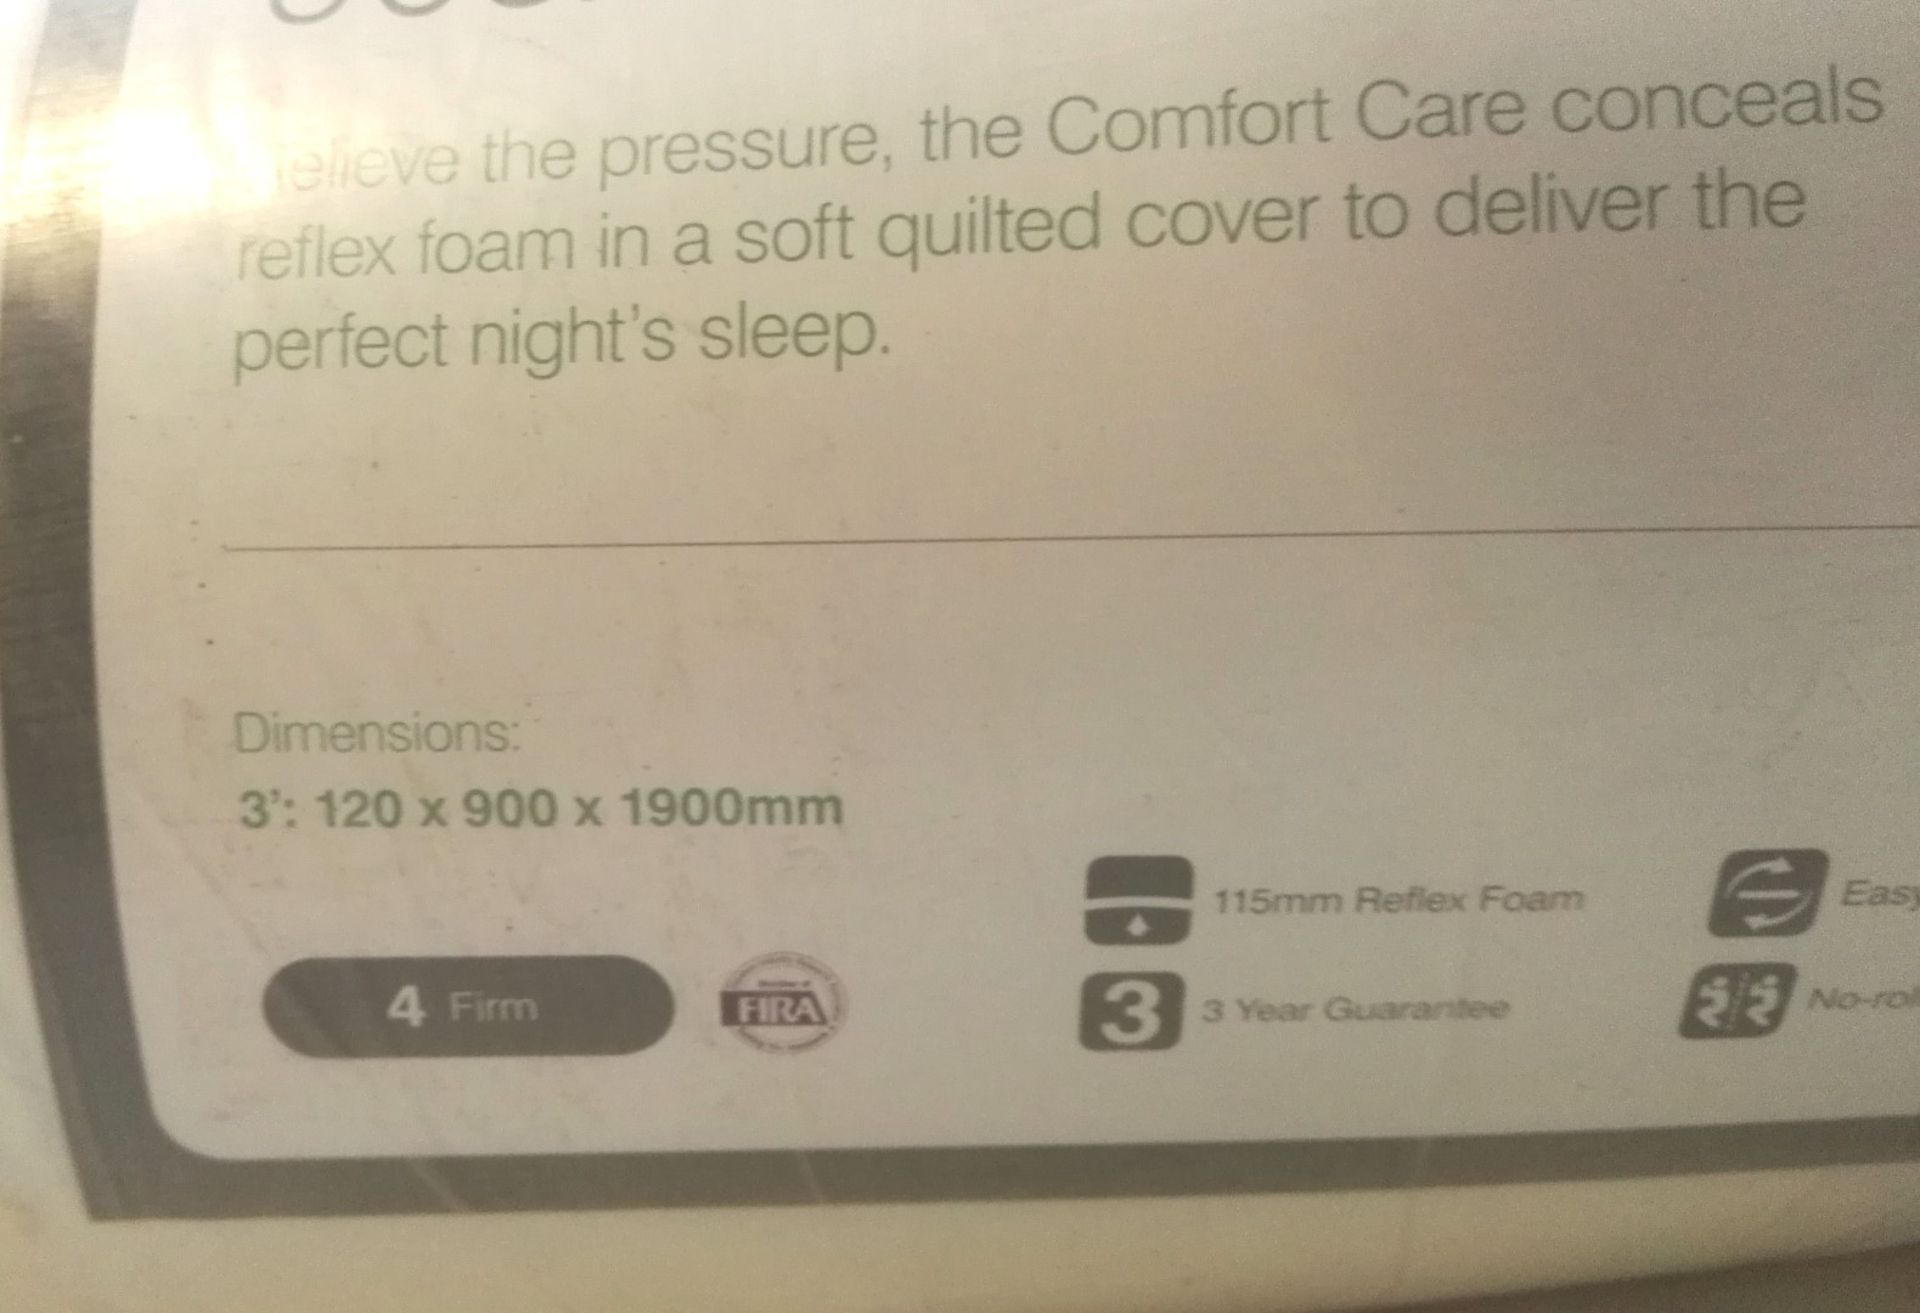 10 x Birlea 90cm Comfort Care Firm Rolled Up Reflex Foam Single Mattress - Brand New Stock - CL286 - - Image 5 of 5